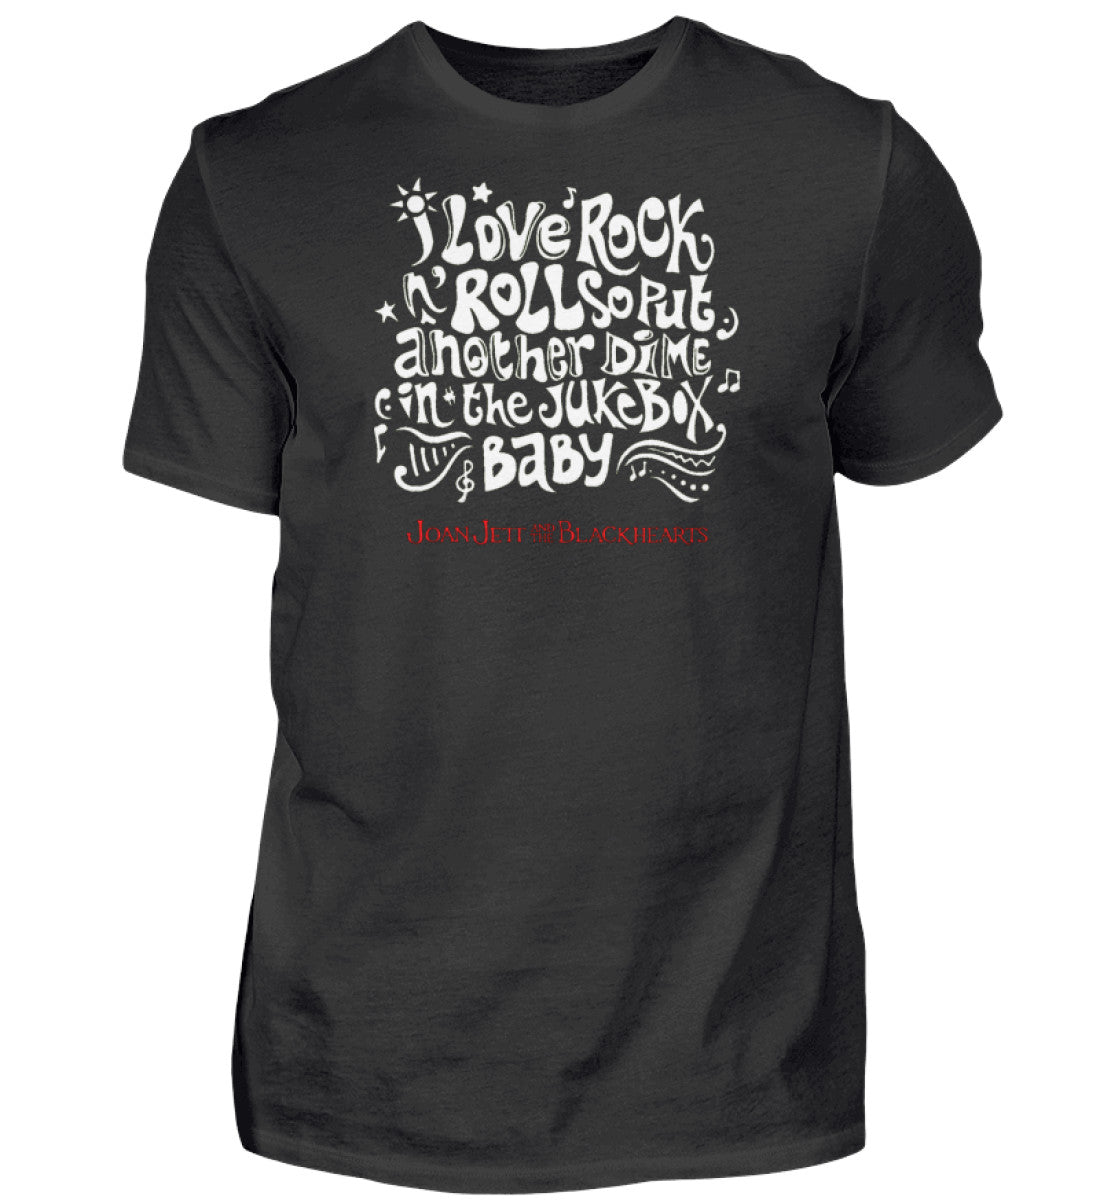 Joan Jett and The Blackhearts Rock Music T-Shirt Funny Cotton Tee Gift Men 